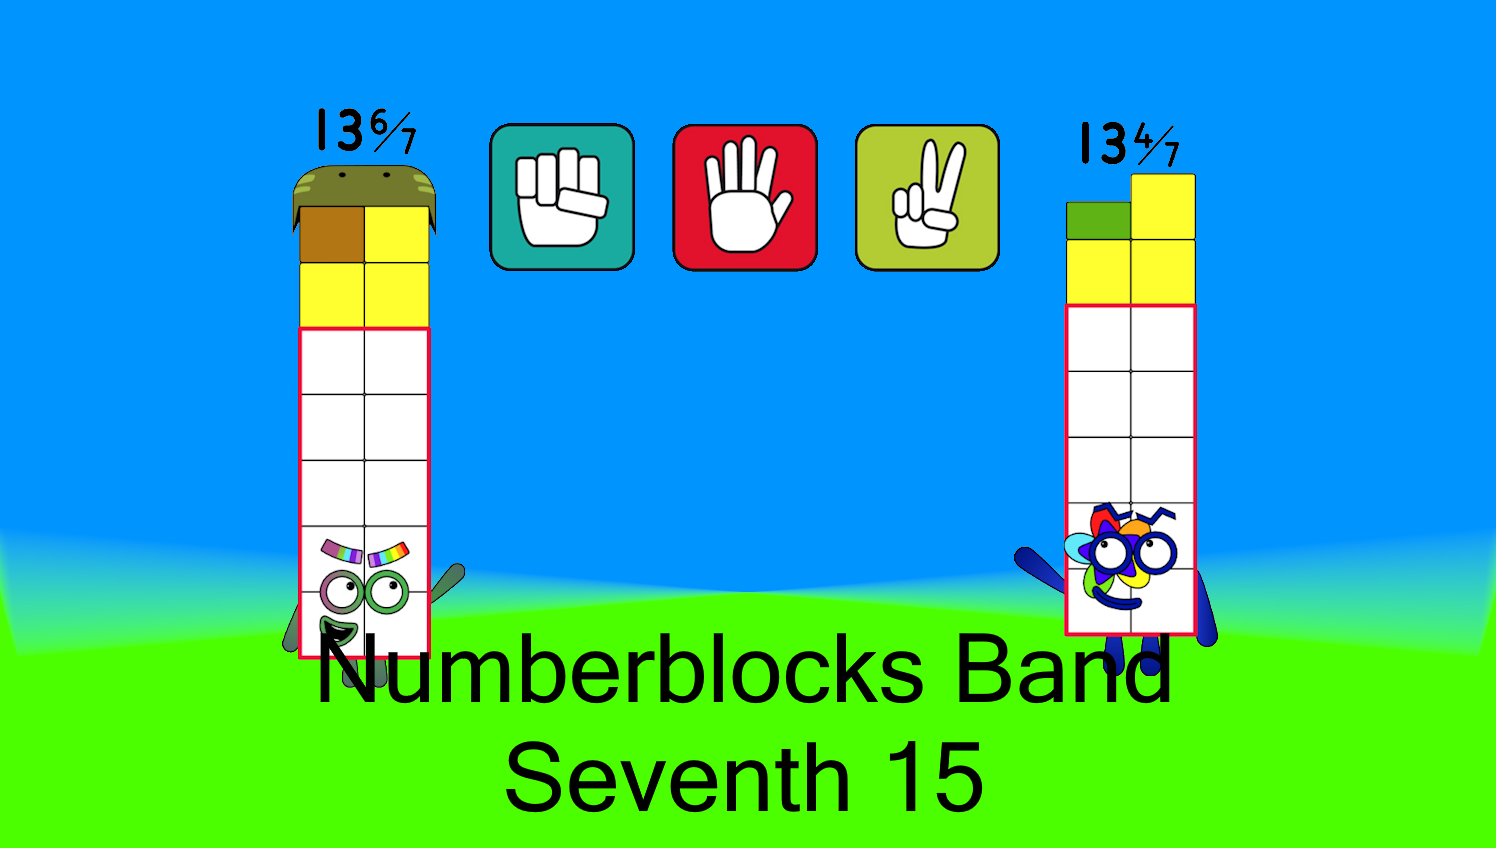 Numberblocks Band seventh 15